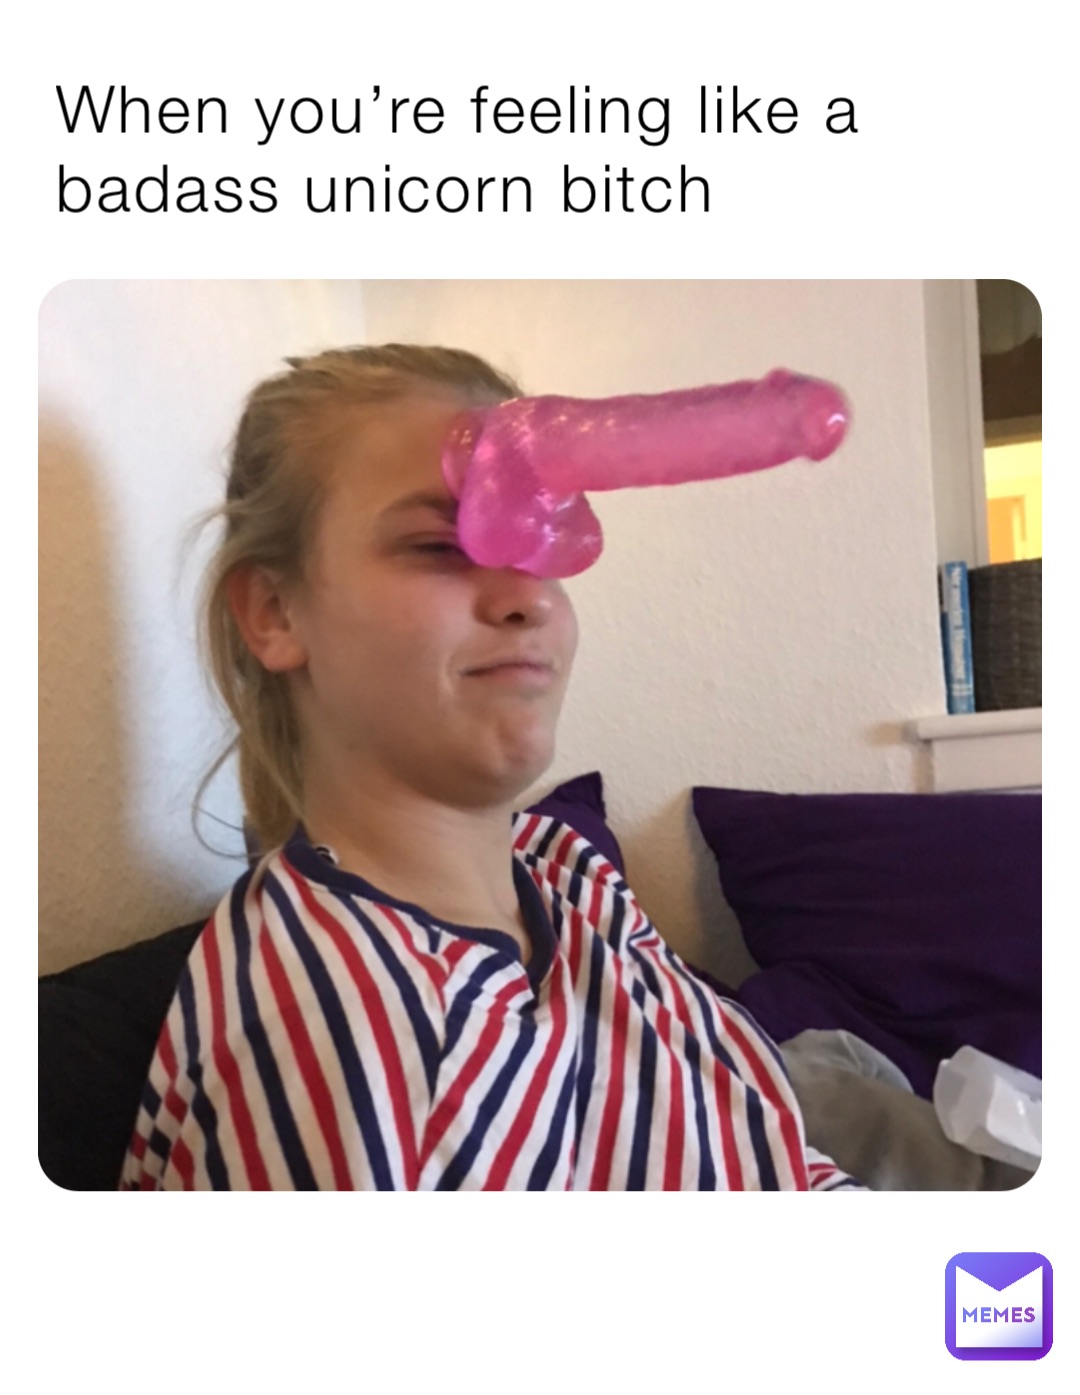 When you’re feeling like a badass unicorn bitch